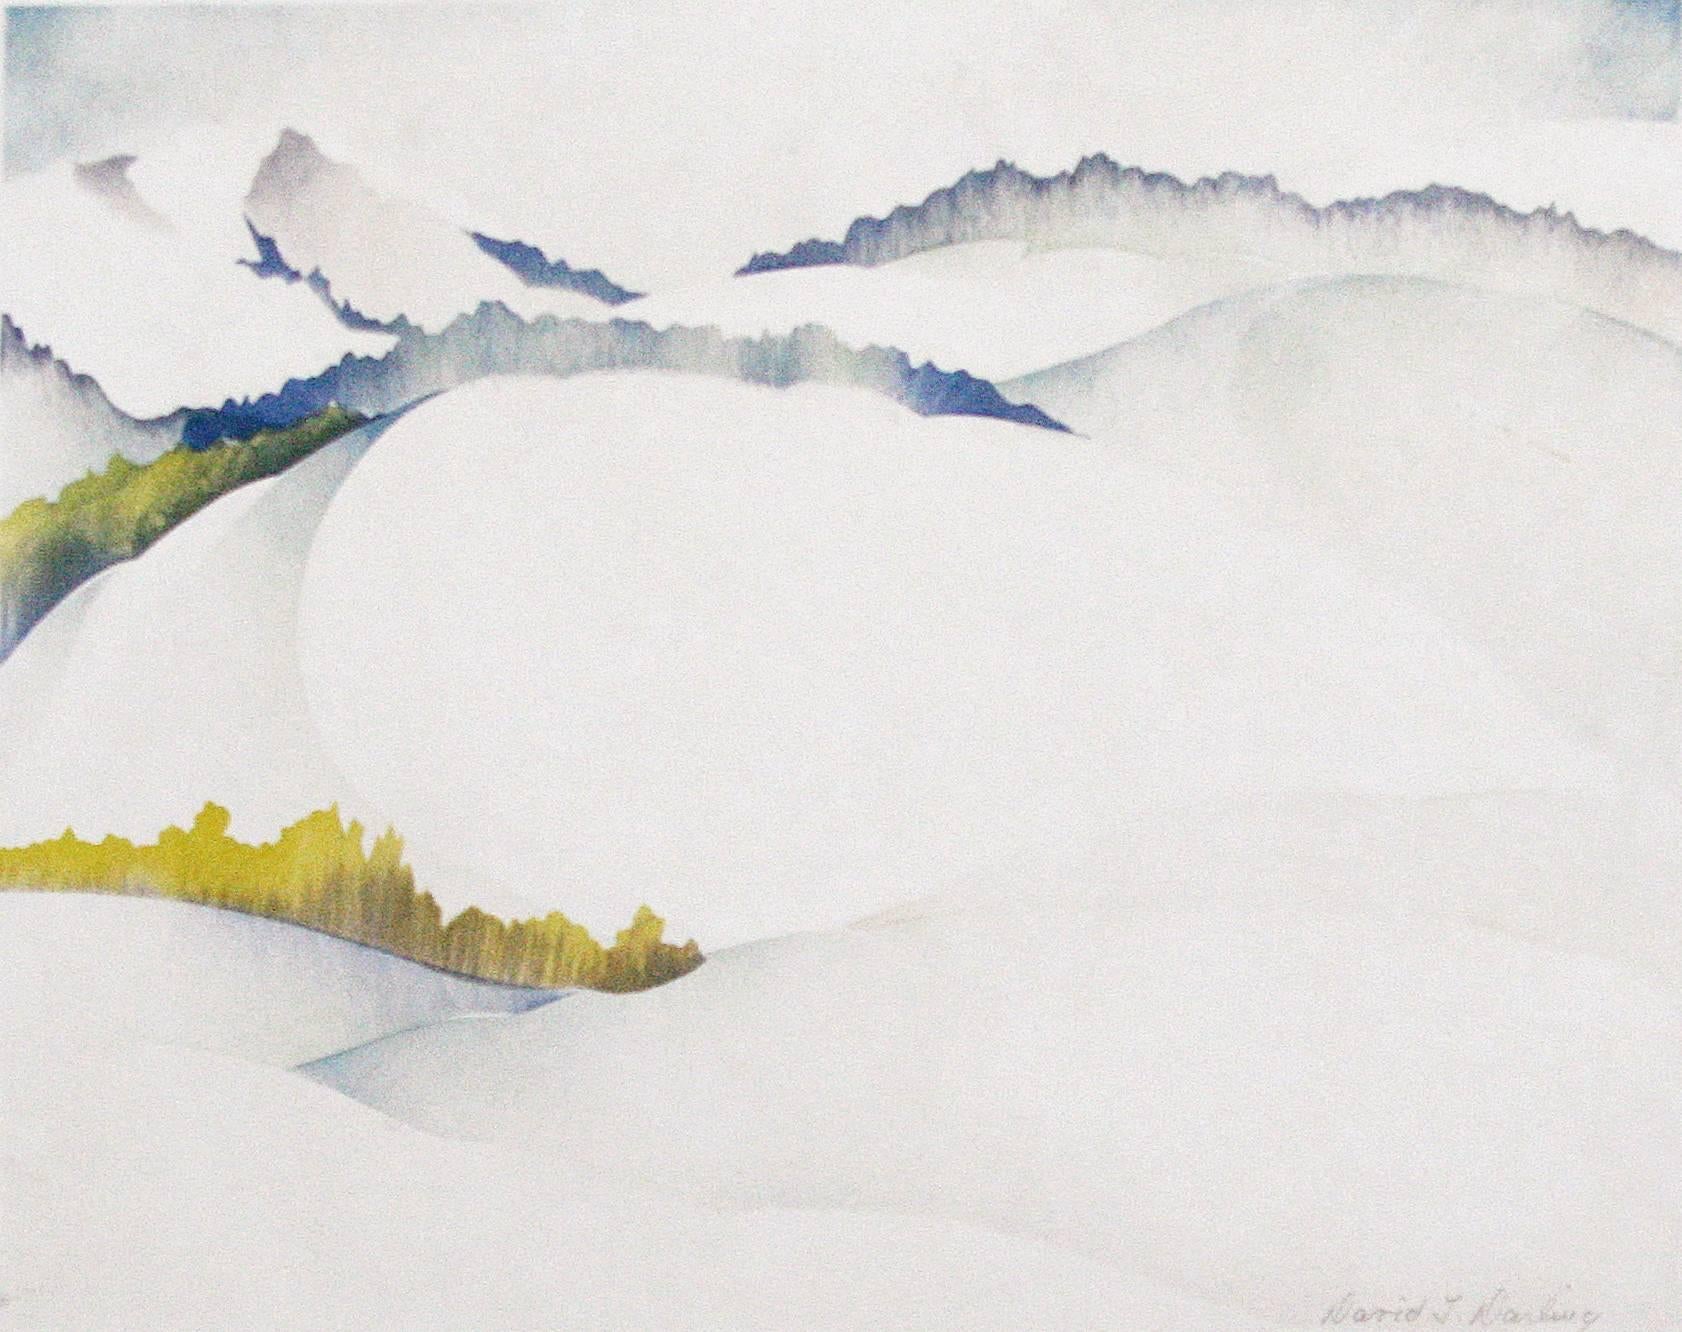 David T. Darling Landscape Print - Snowscape and Landscape